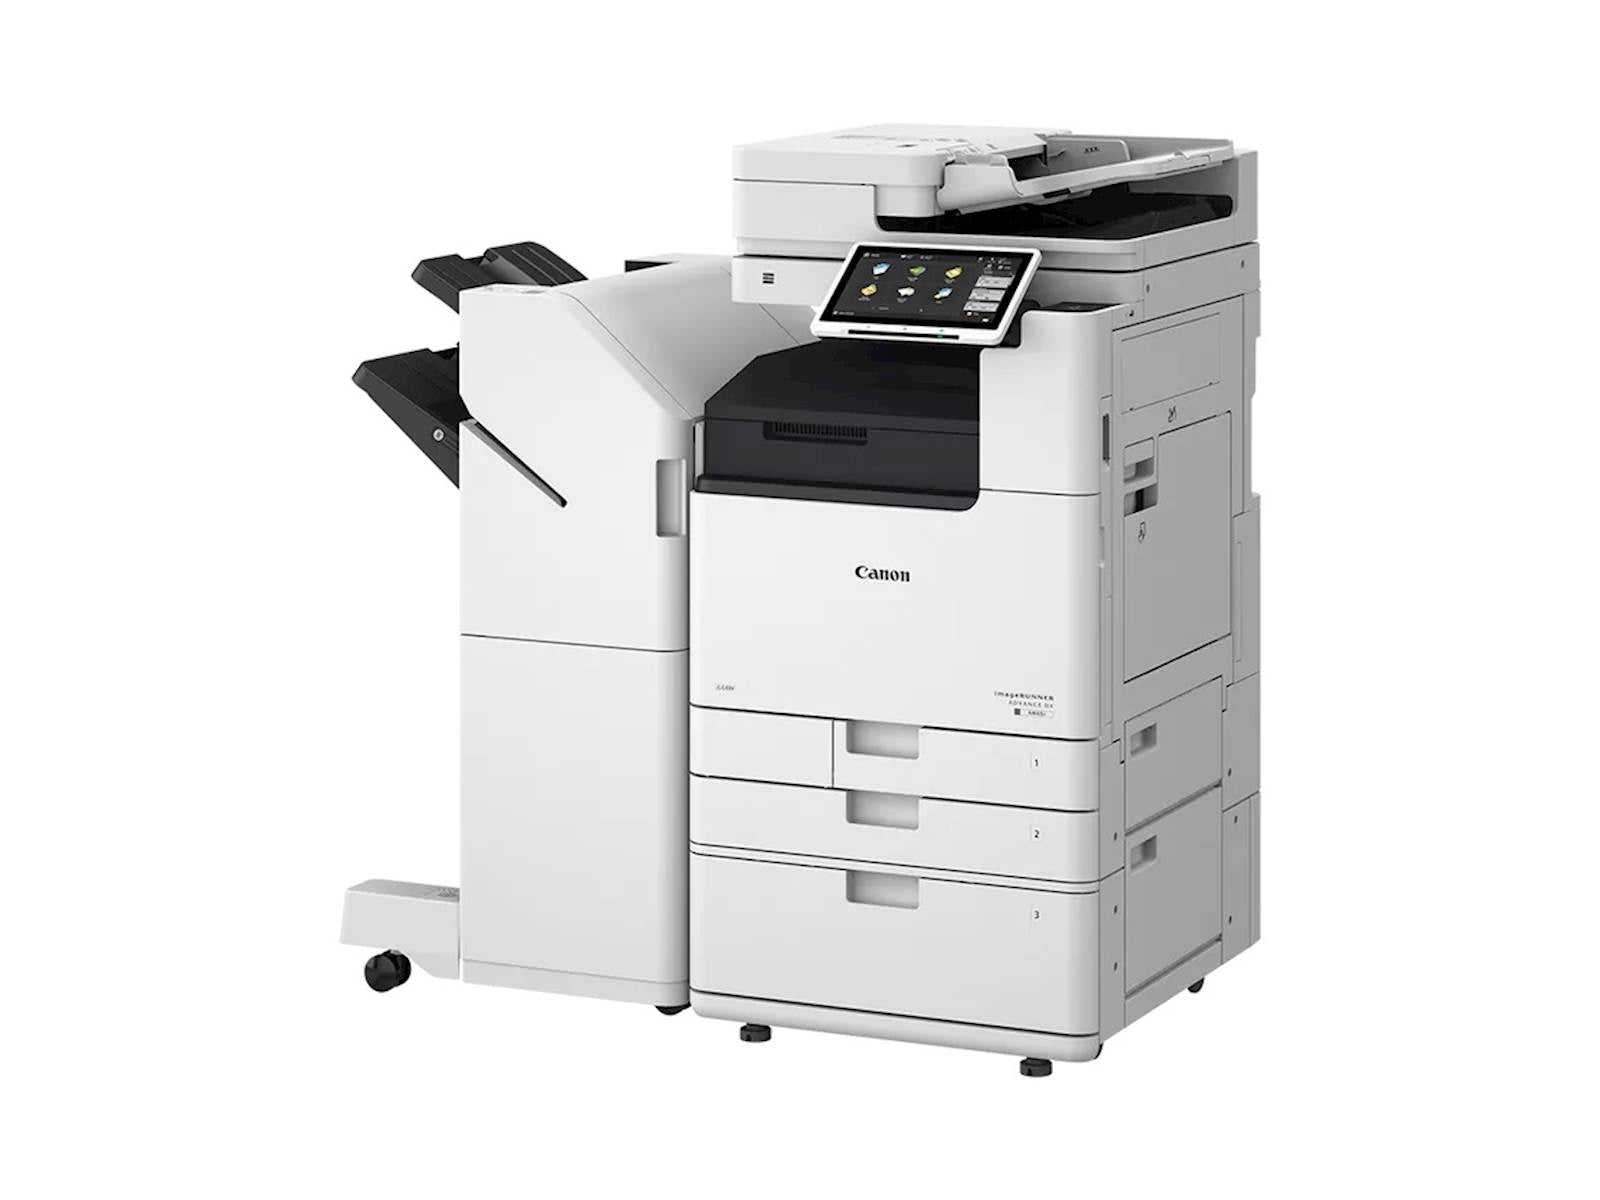 Printer CANON imageRunner Advance DX4825i Bundl